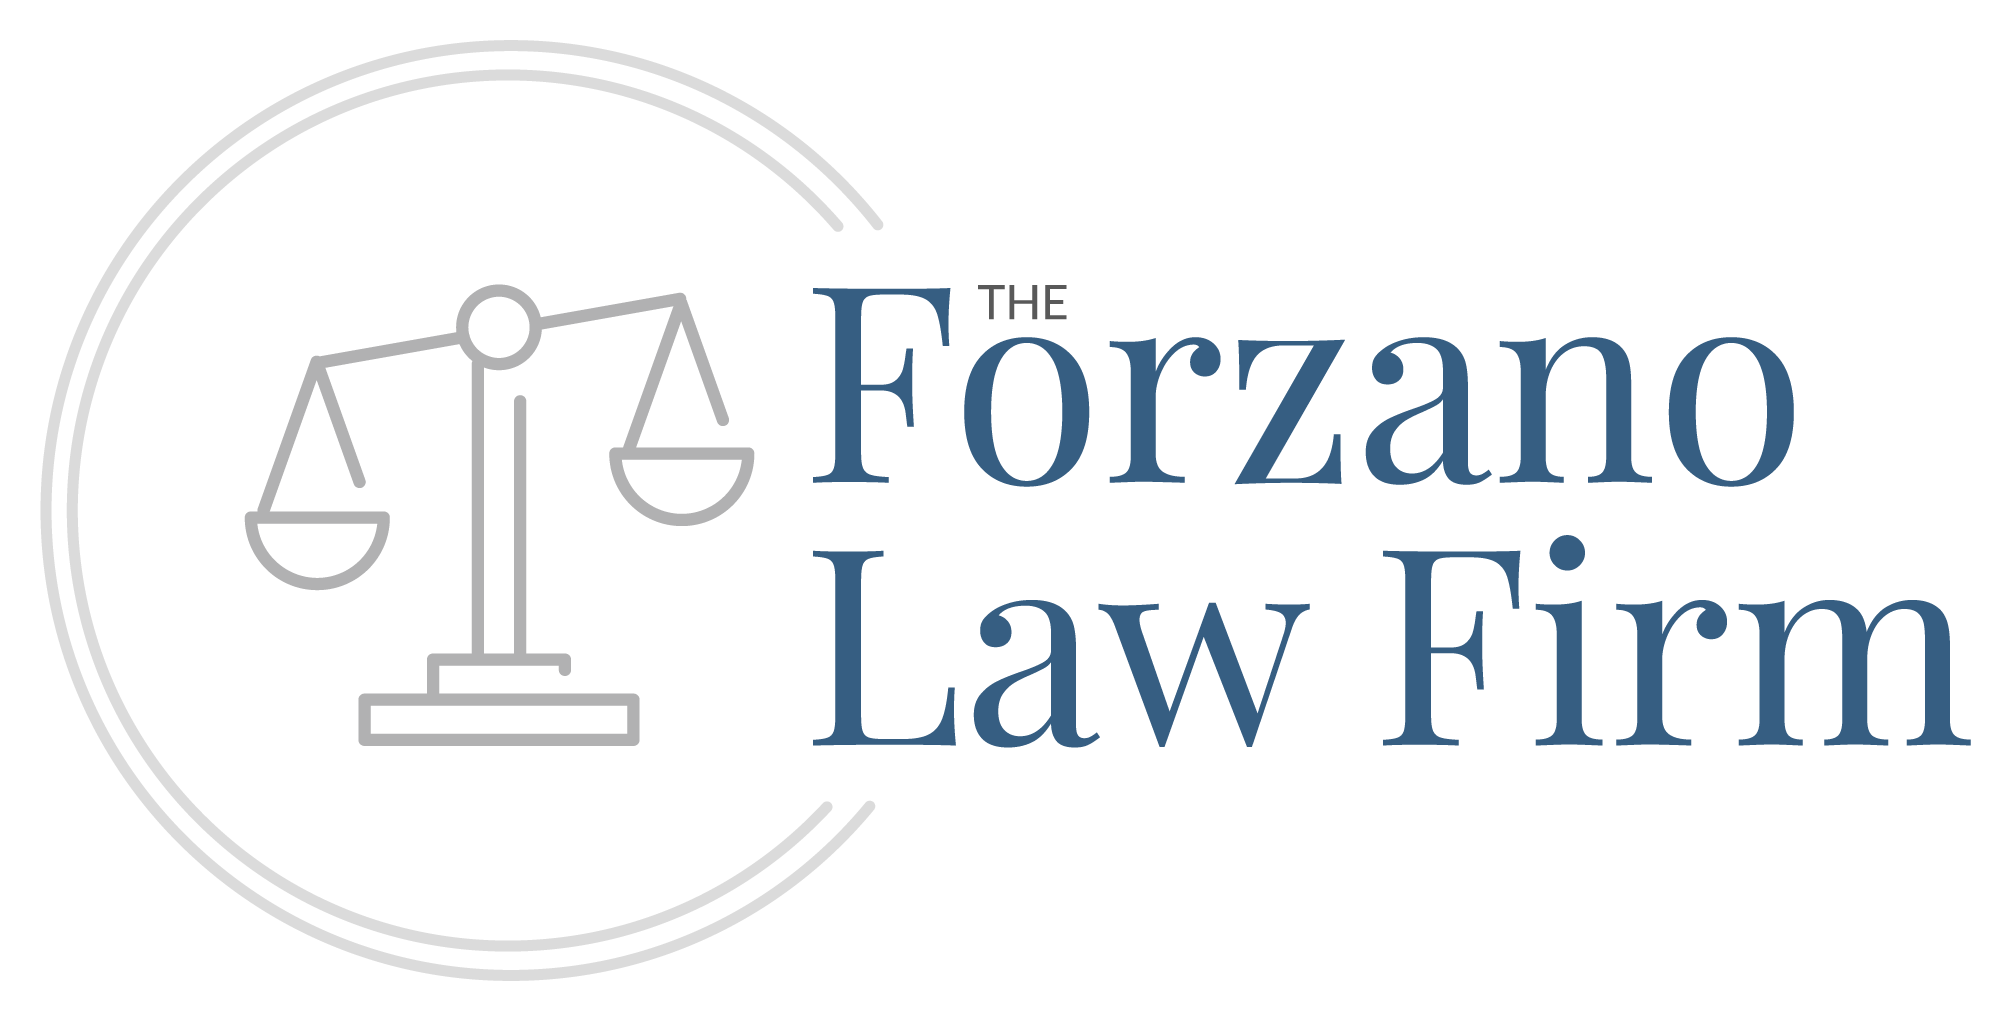 The Forzano Law Firm Logo